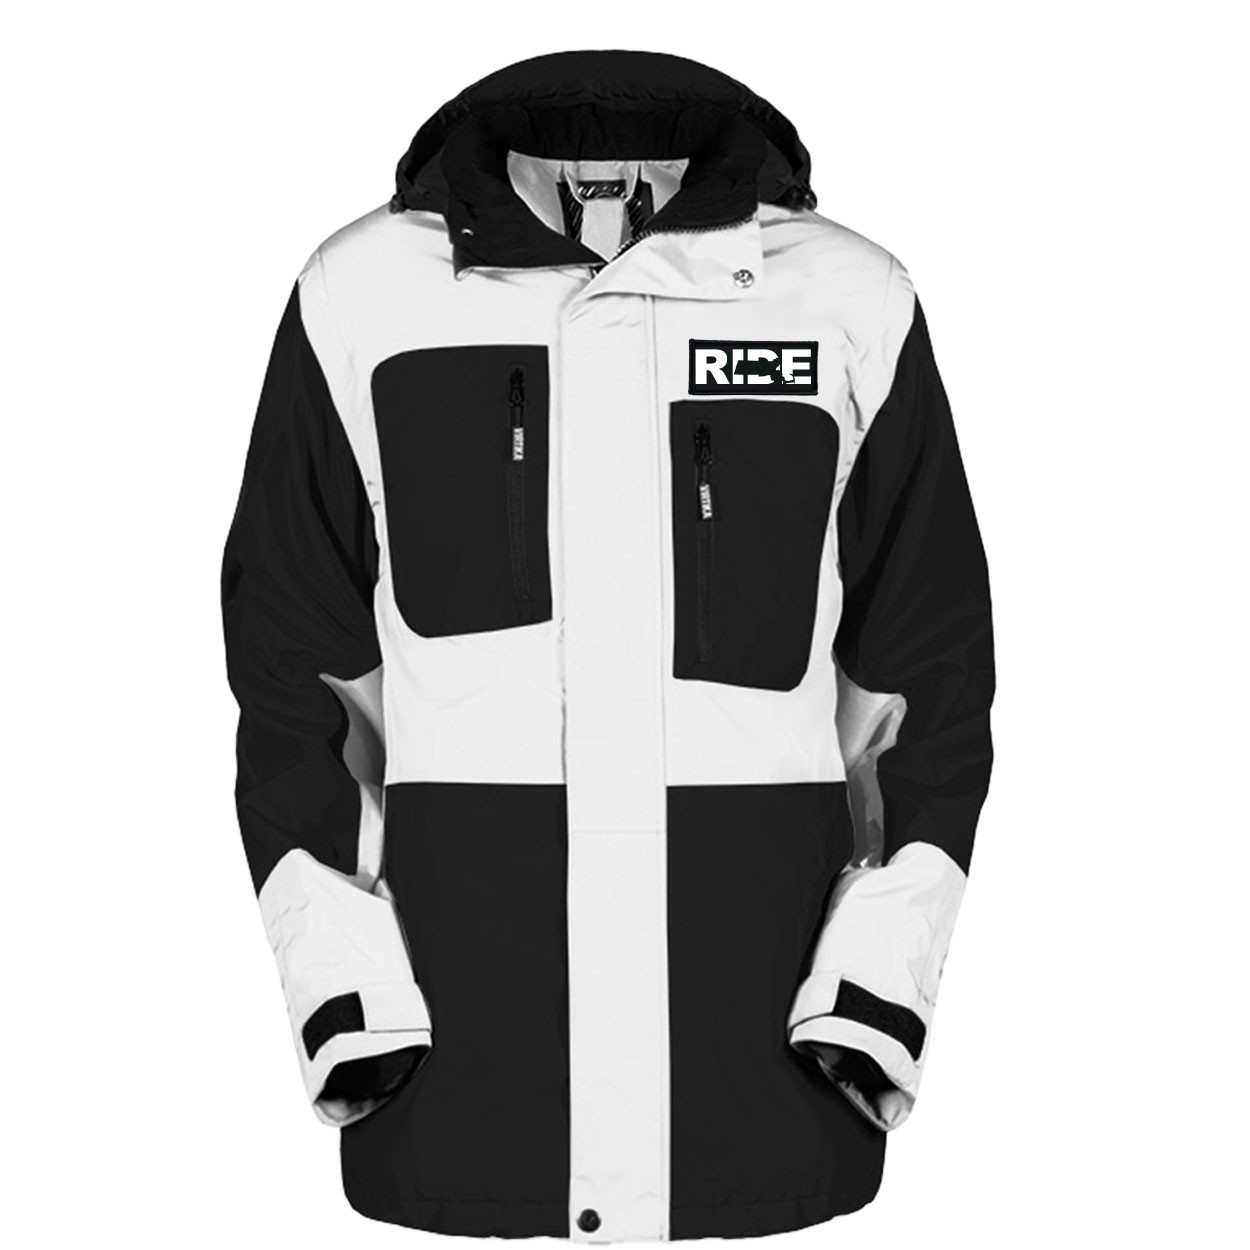 Ride Massachusetts Classic Woven Patch Pro Snowboard Jacket (Black/White)